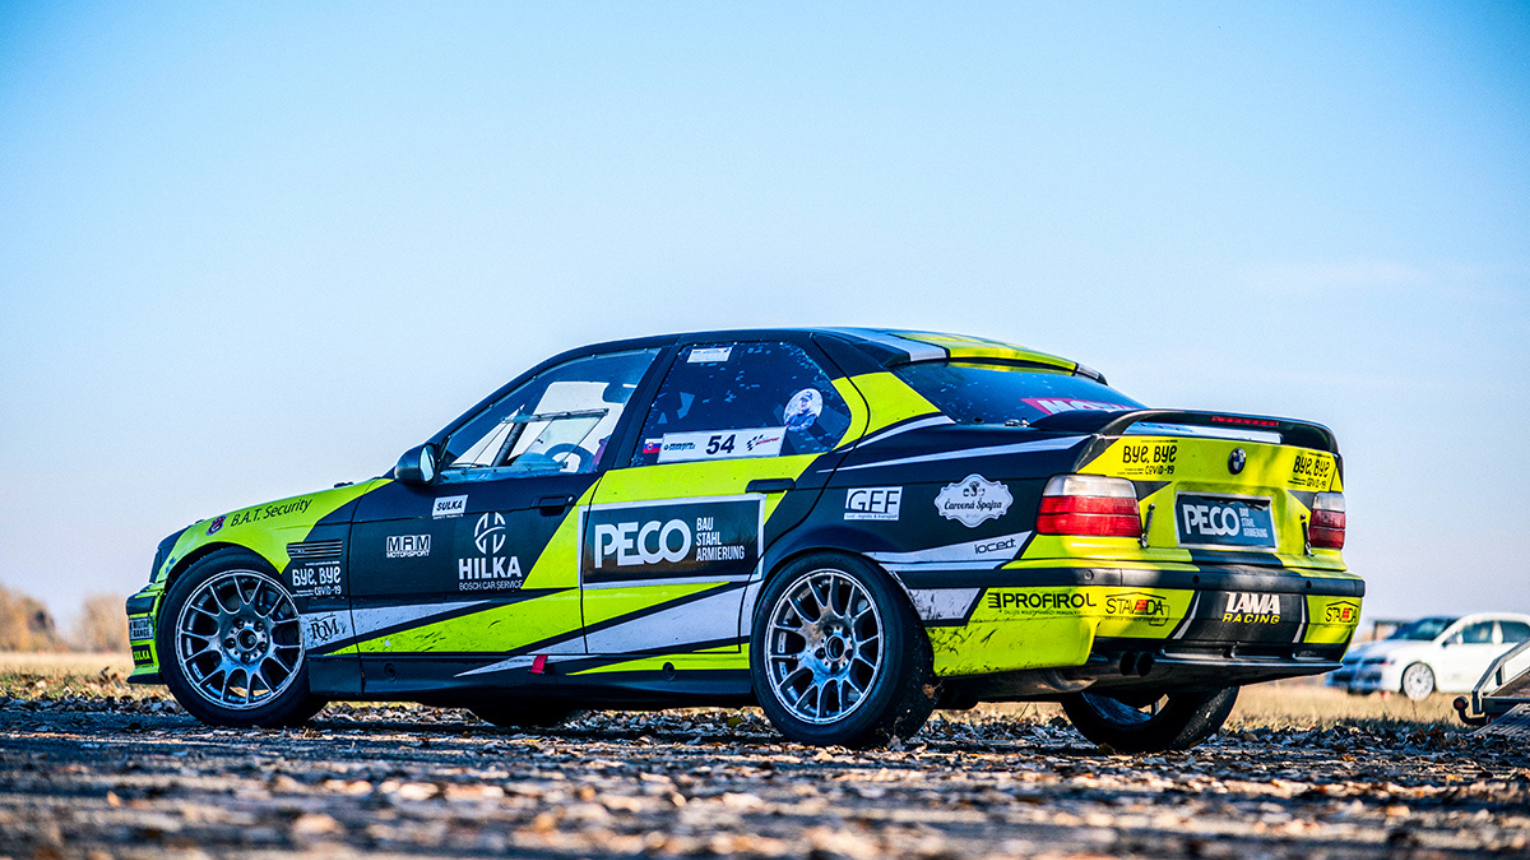 BMW E36 versenyautóval RaceTaxizás a Hungaroringen